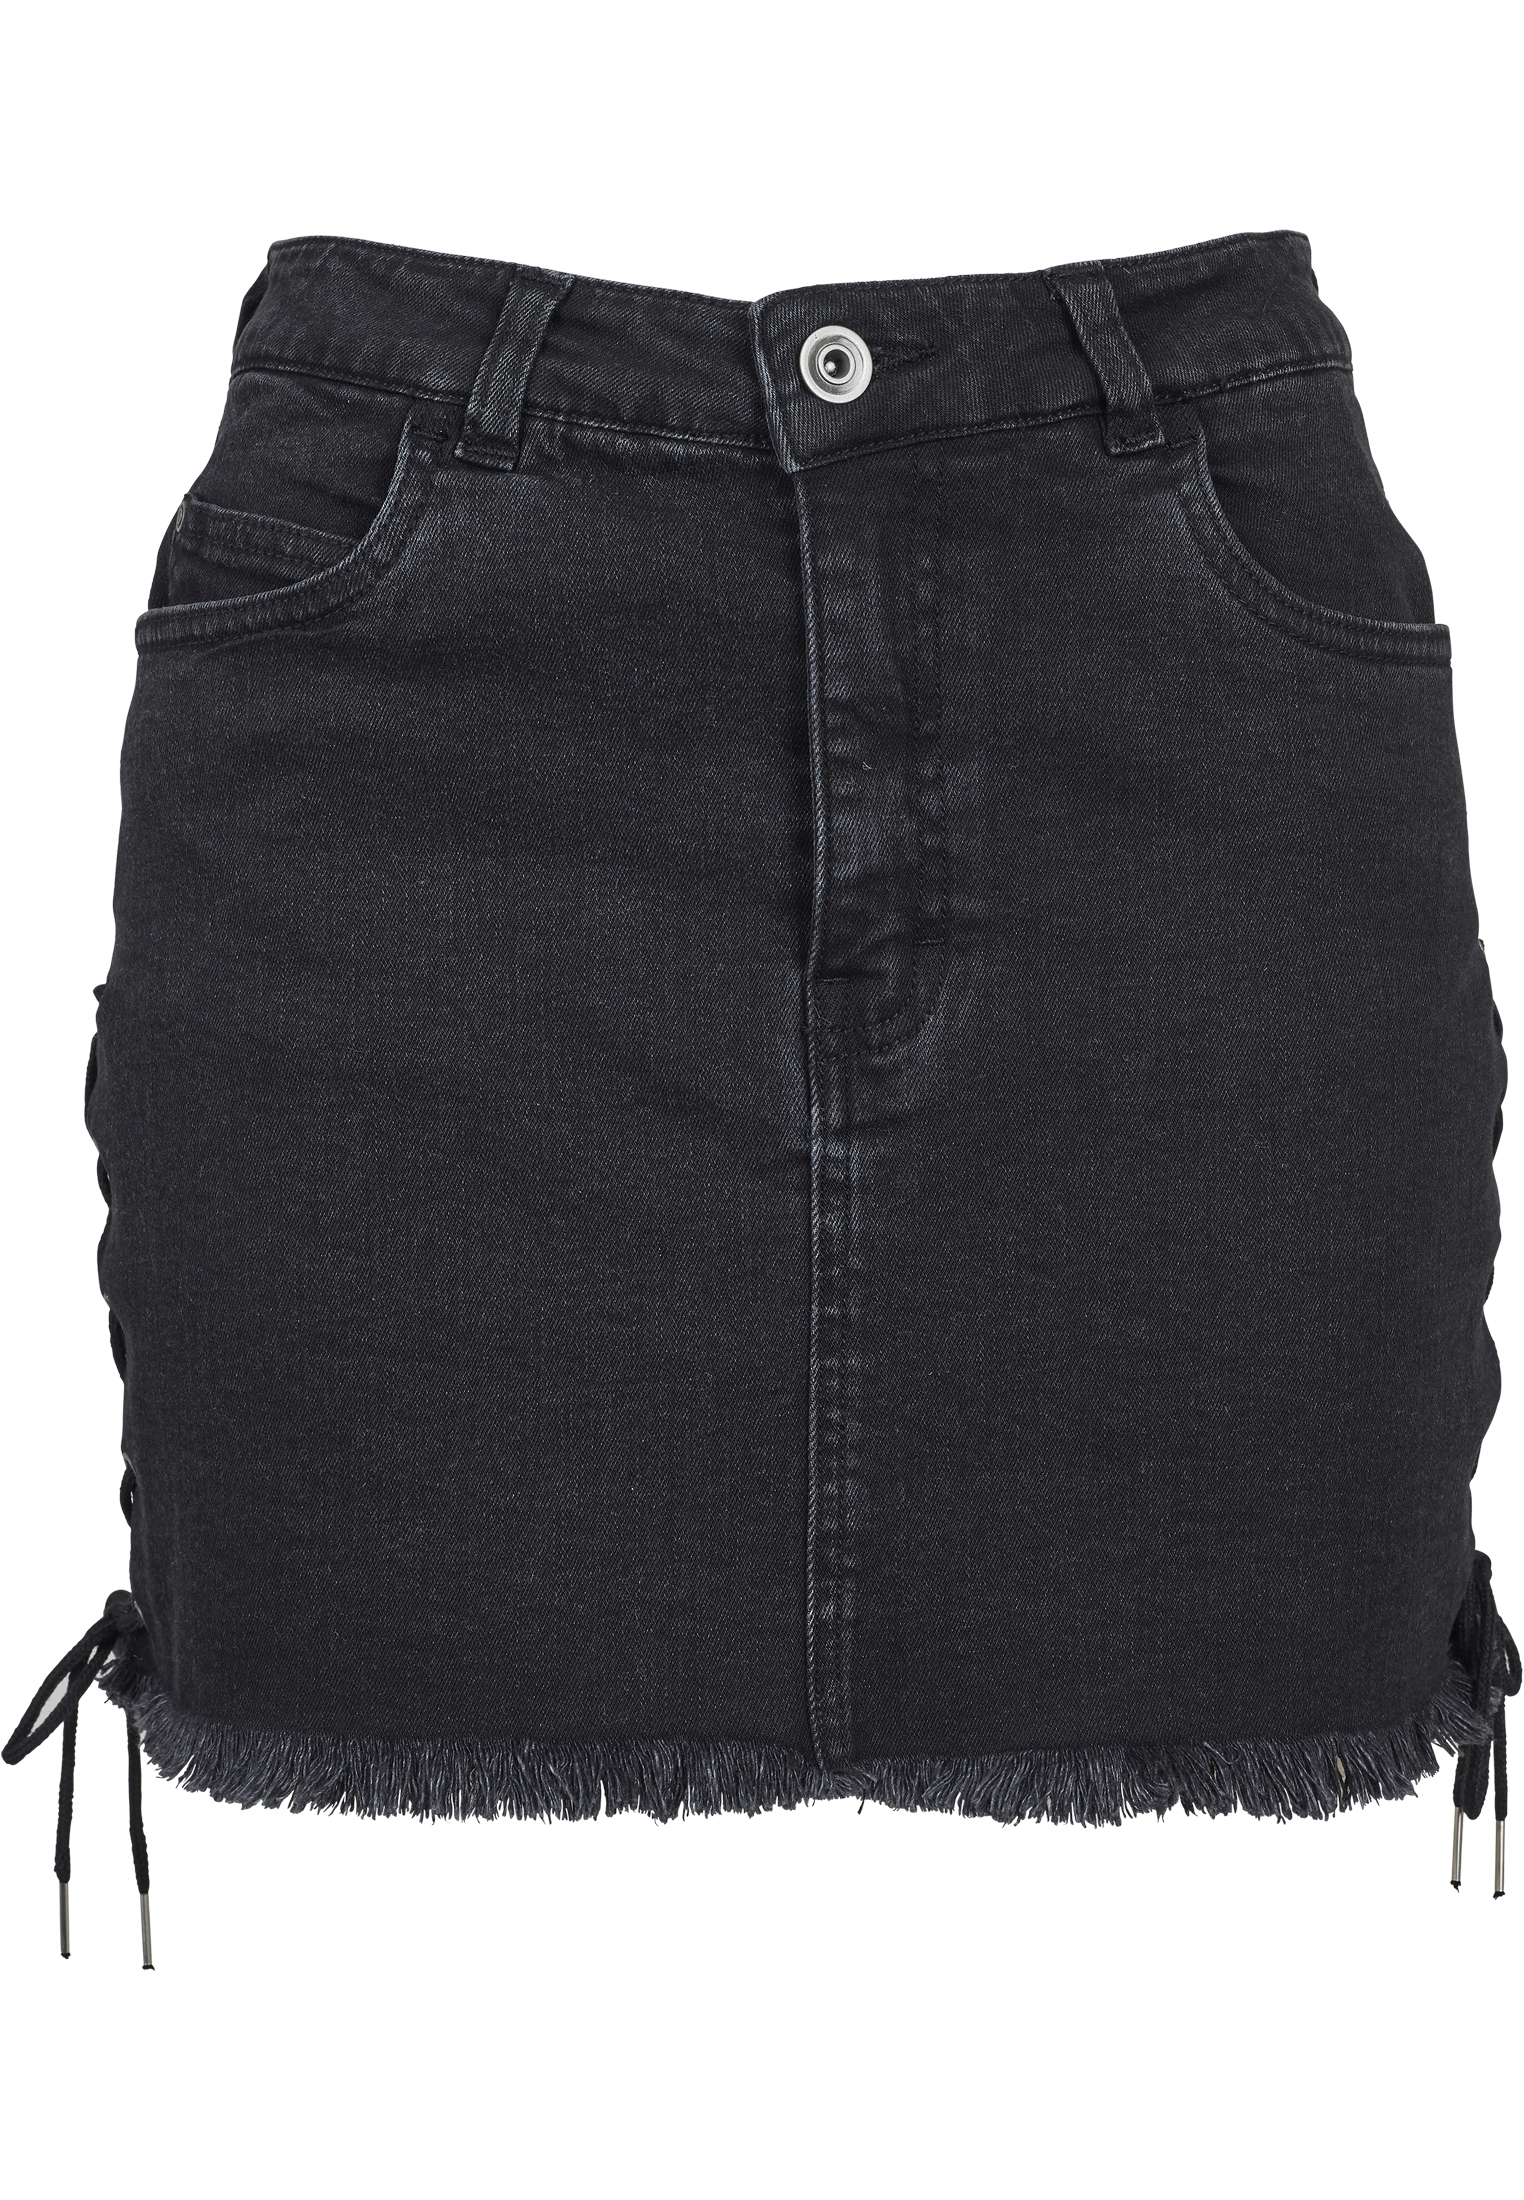 Kleider & R?cke Ladies Denim Lace Up Skirt in Farbe black washed